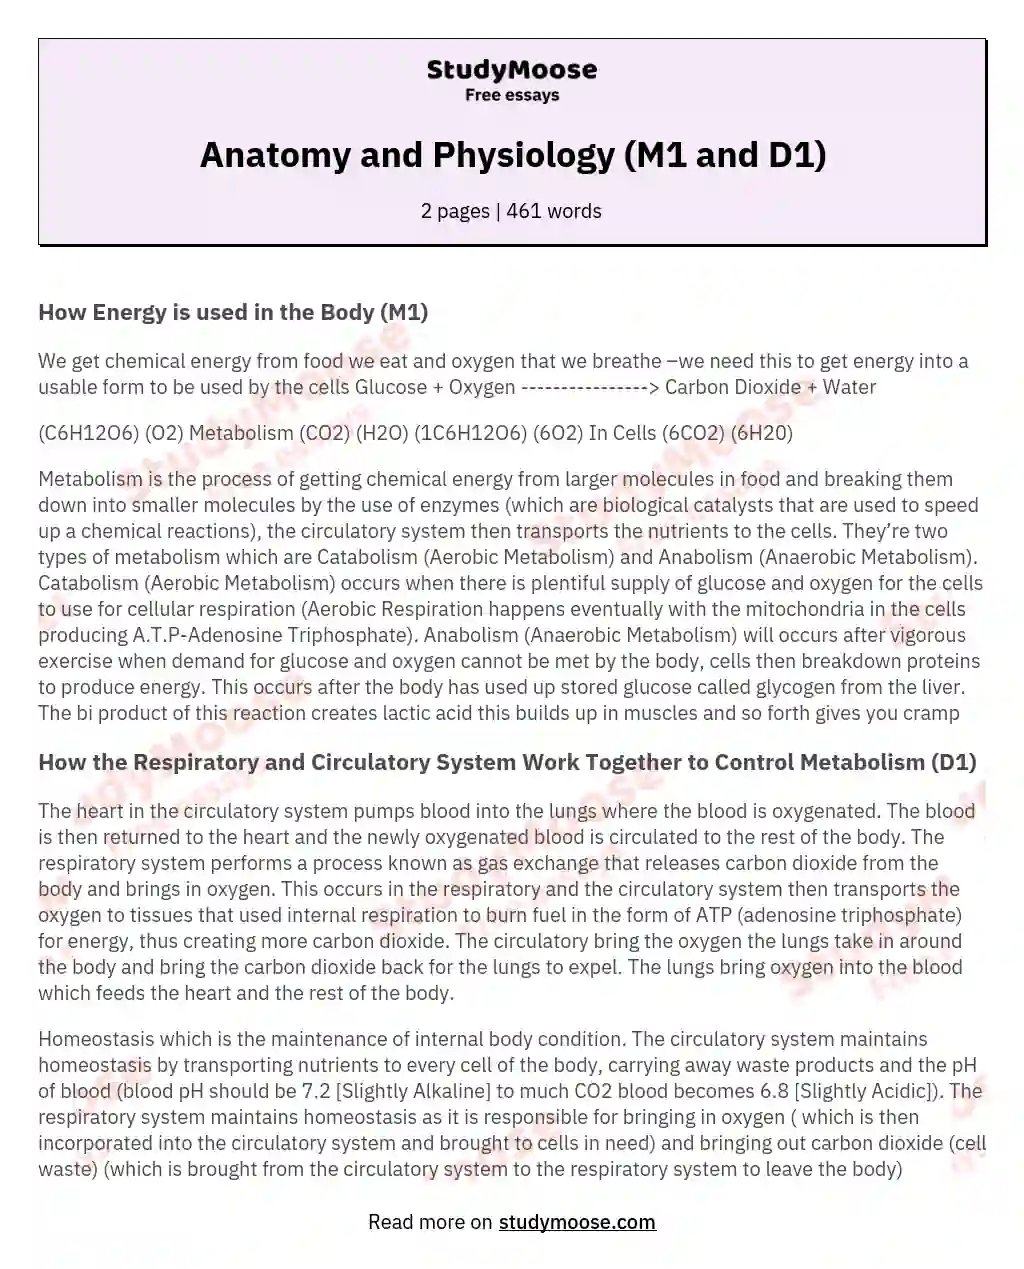 anatomy and physiology essay